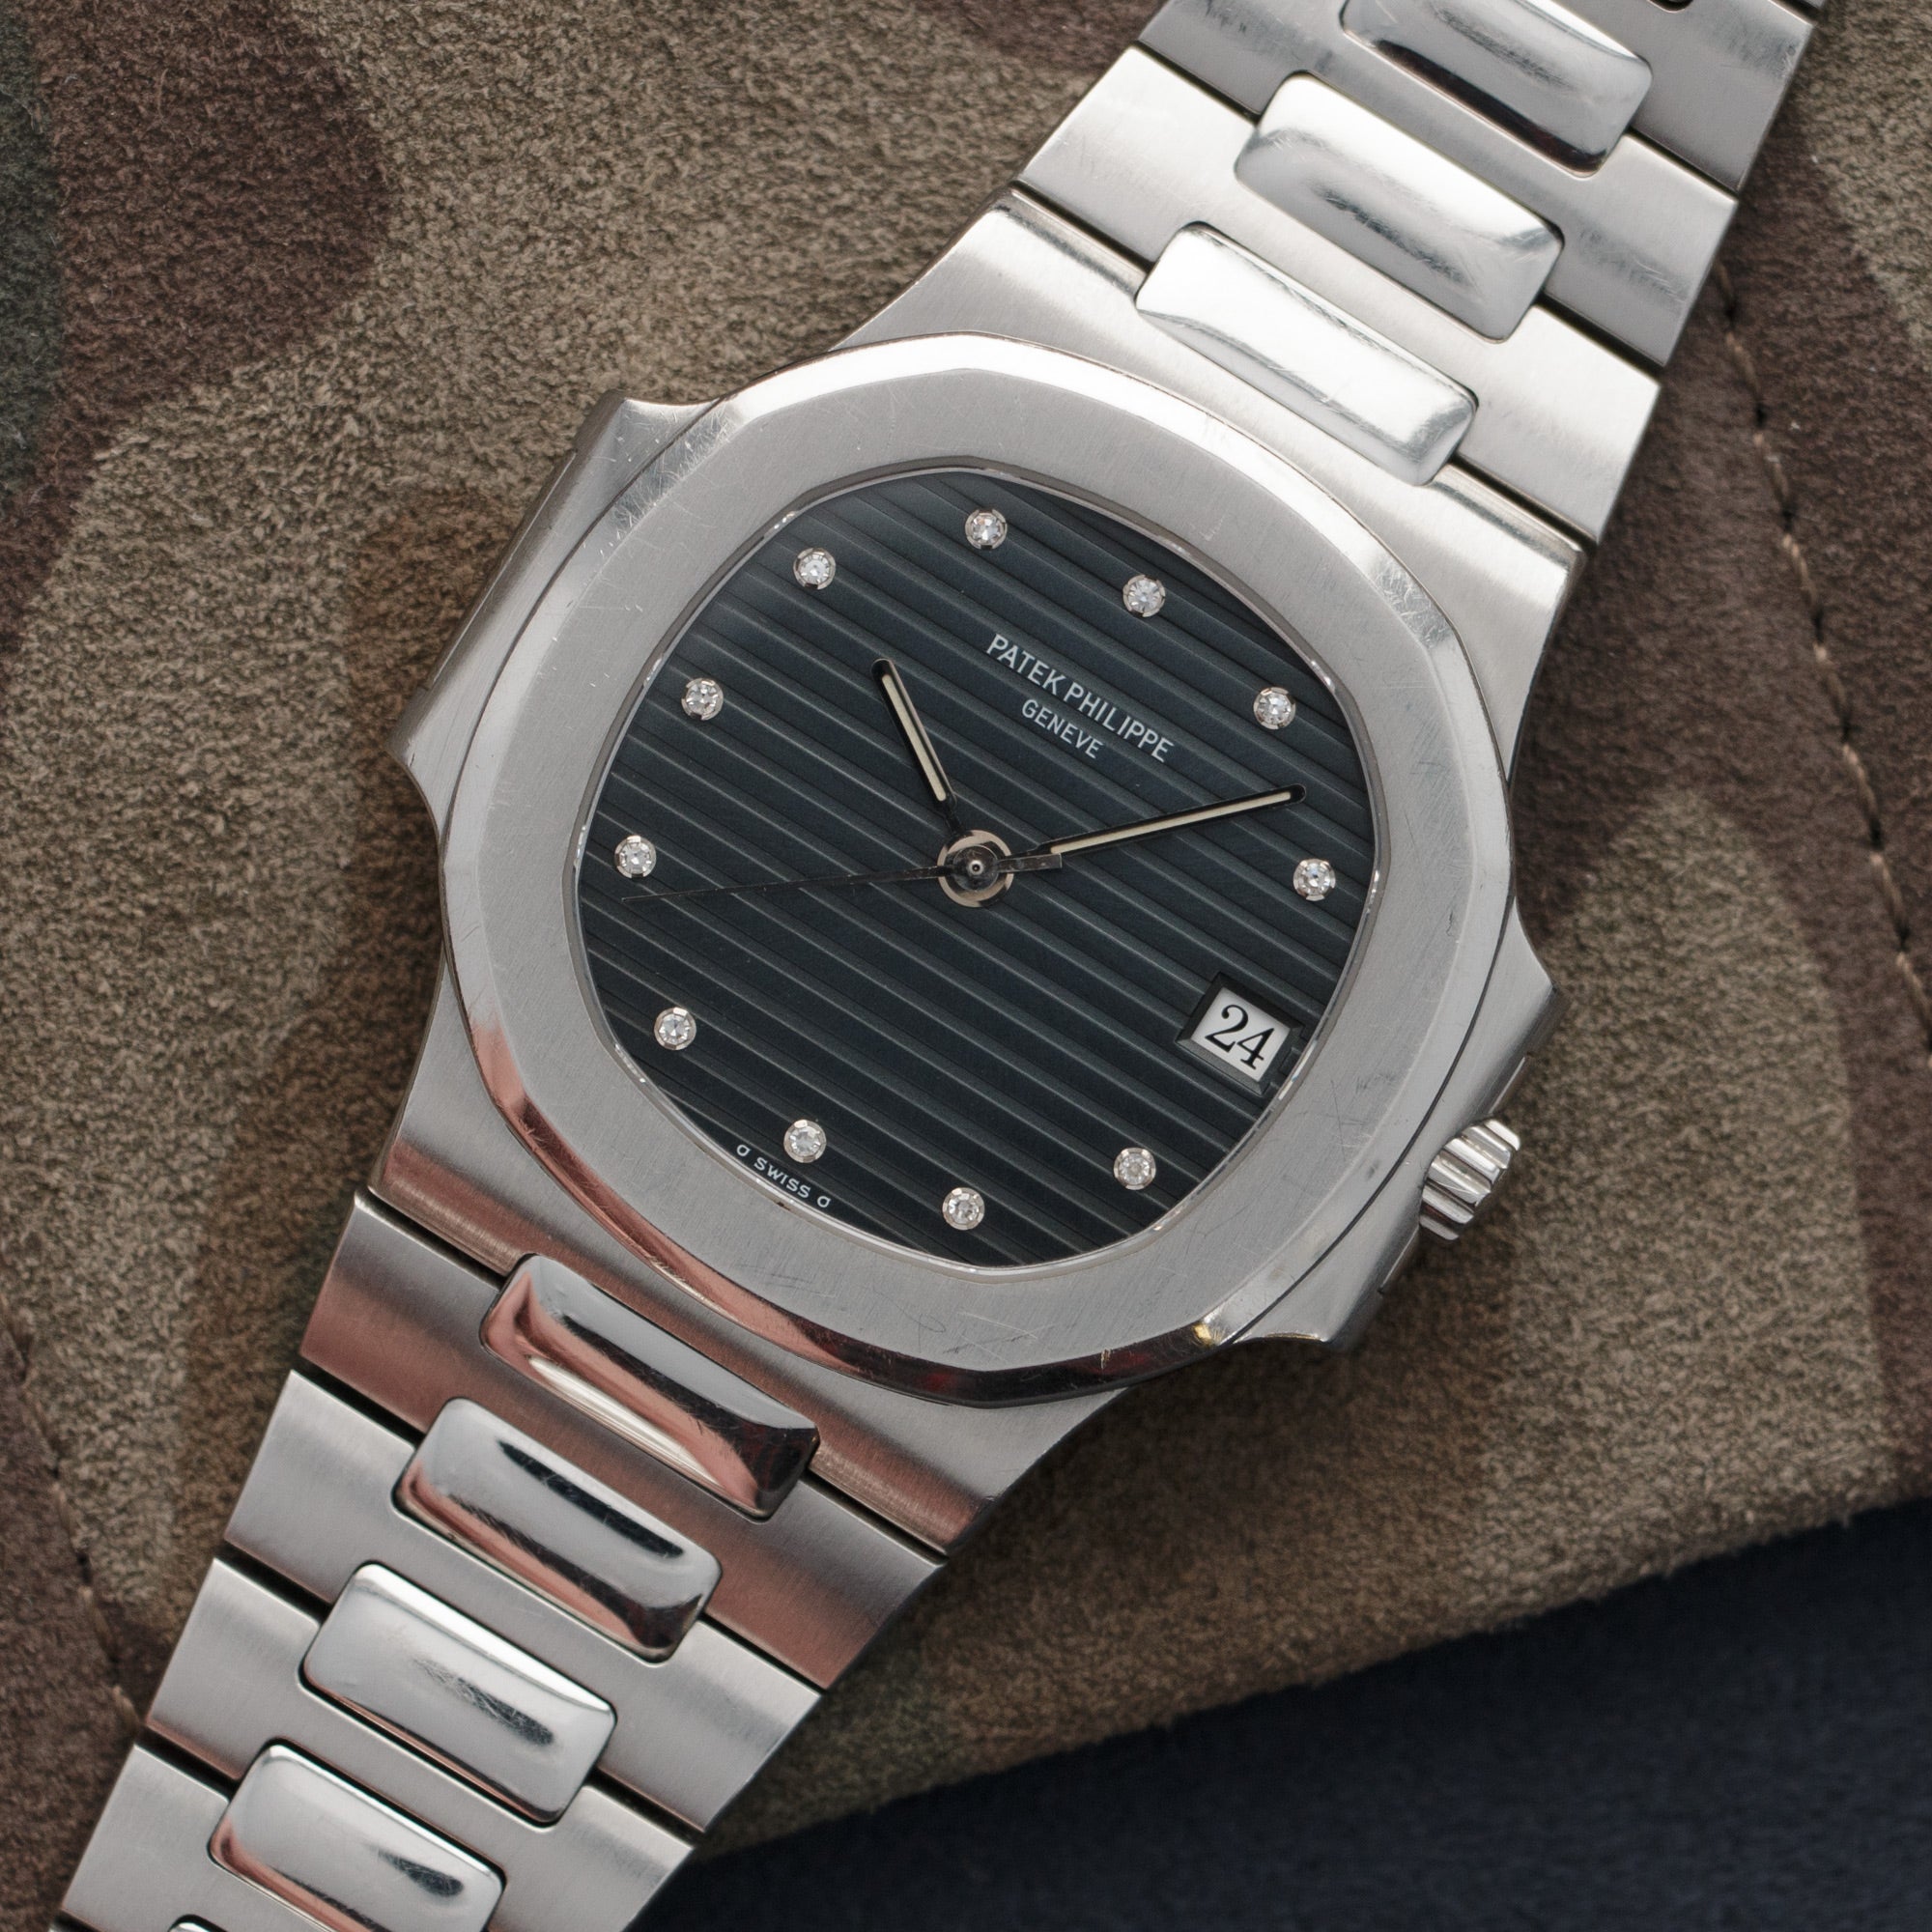 Patek Philippe - Patek Philippe Nautlus Automatic Watch Ref. 3800 - The Keystone Watches